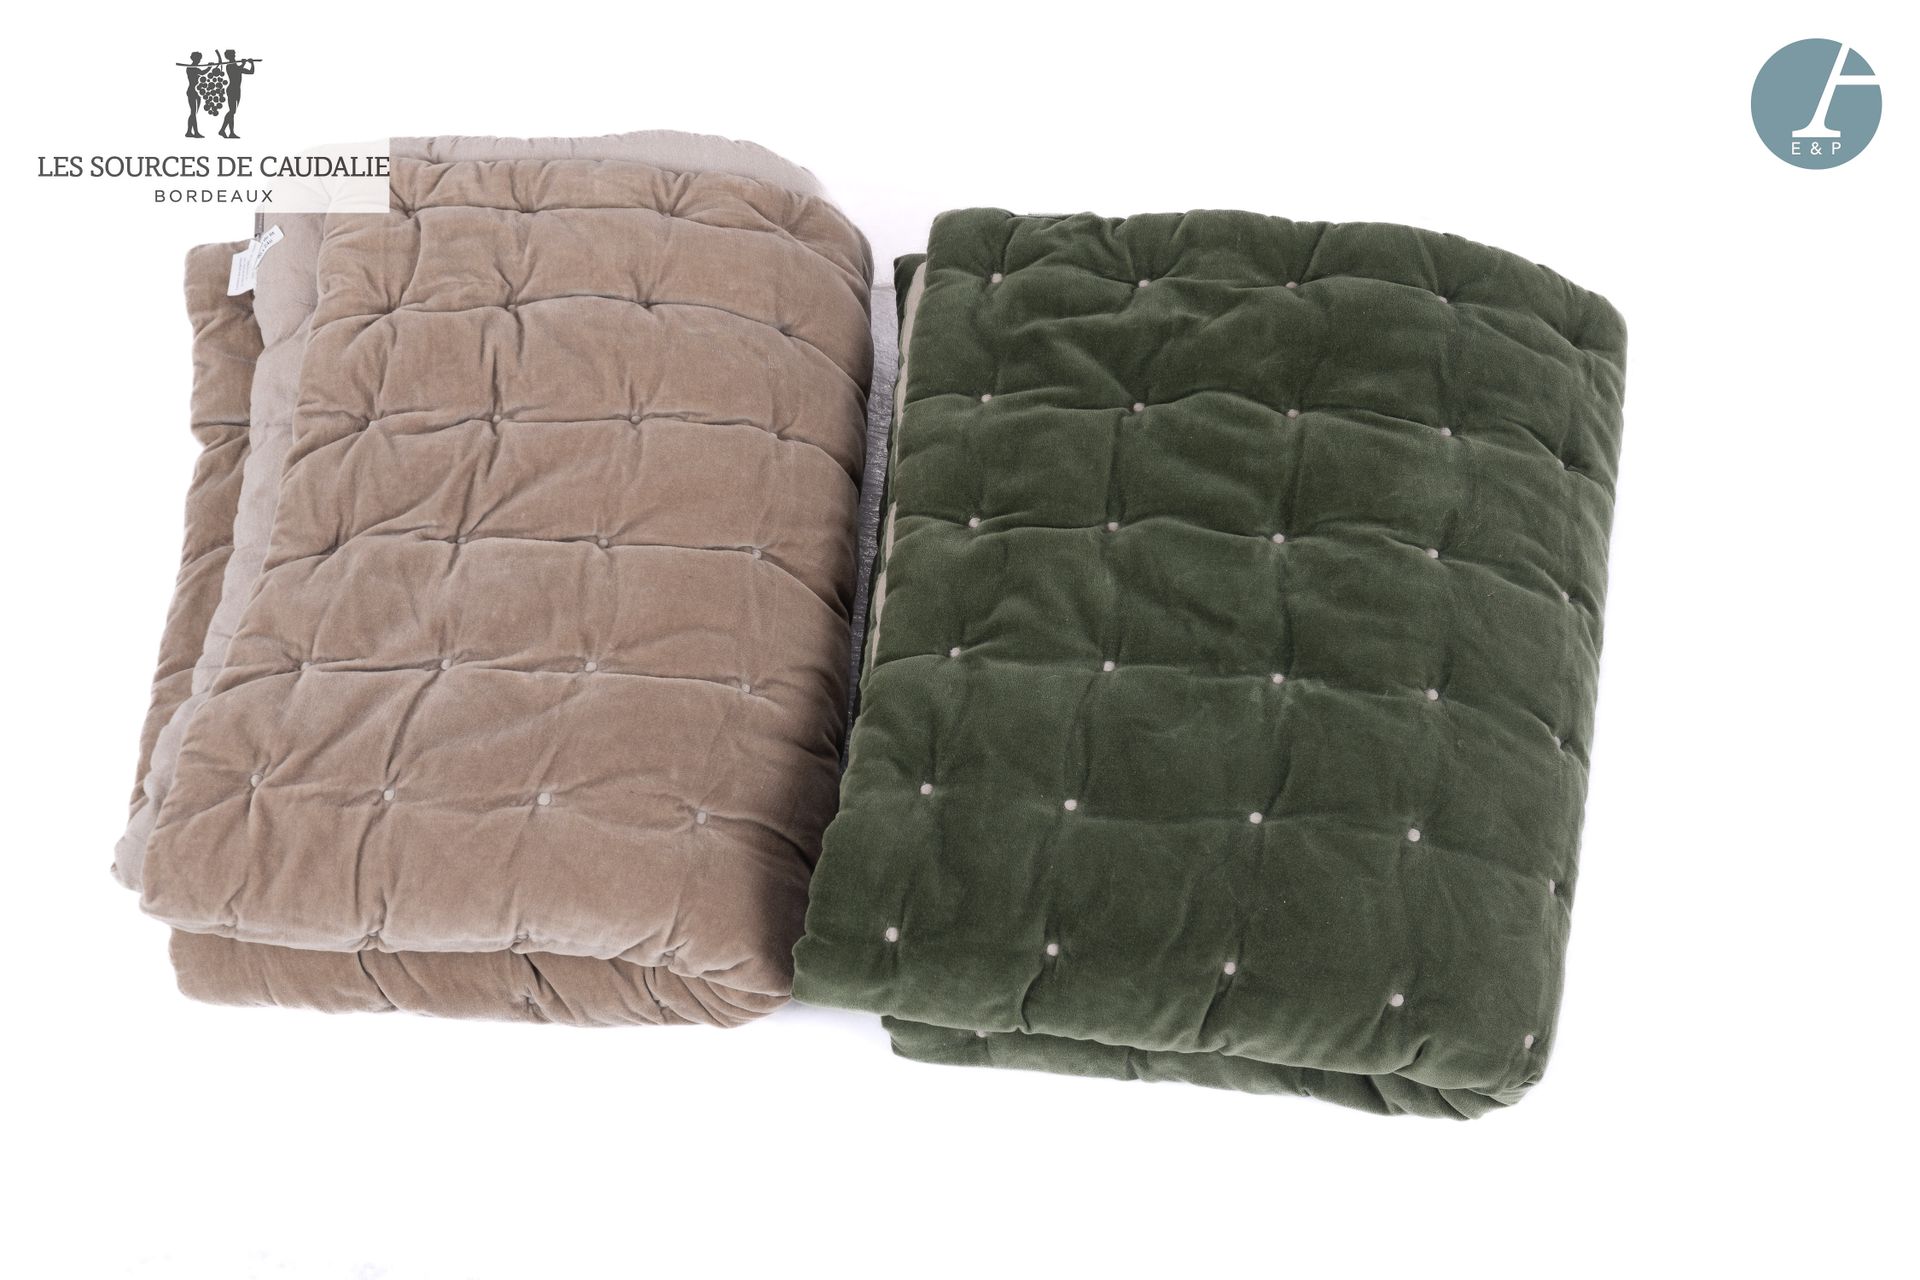 Null 来自卡达里资源公司（Grange à Bateaux）。
一套两个床罩，一个是灰色天鹅绒，另一个是绿色天鹅绒。
床单236x81厘米
品牌Viva R&hellip;